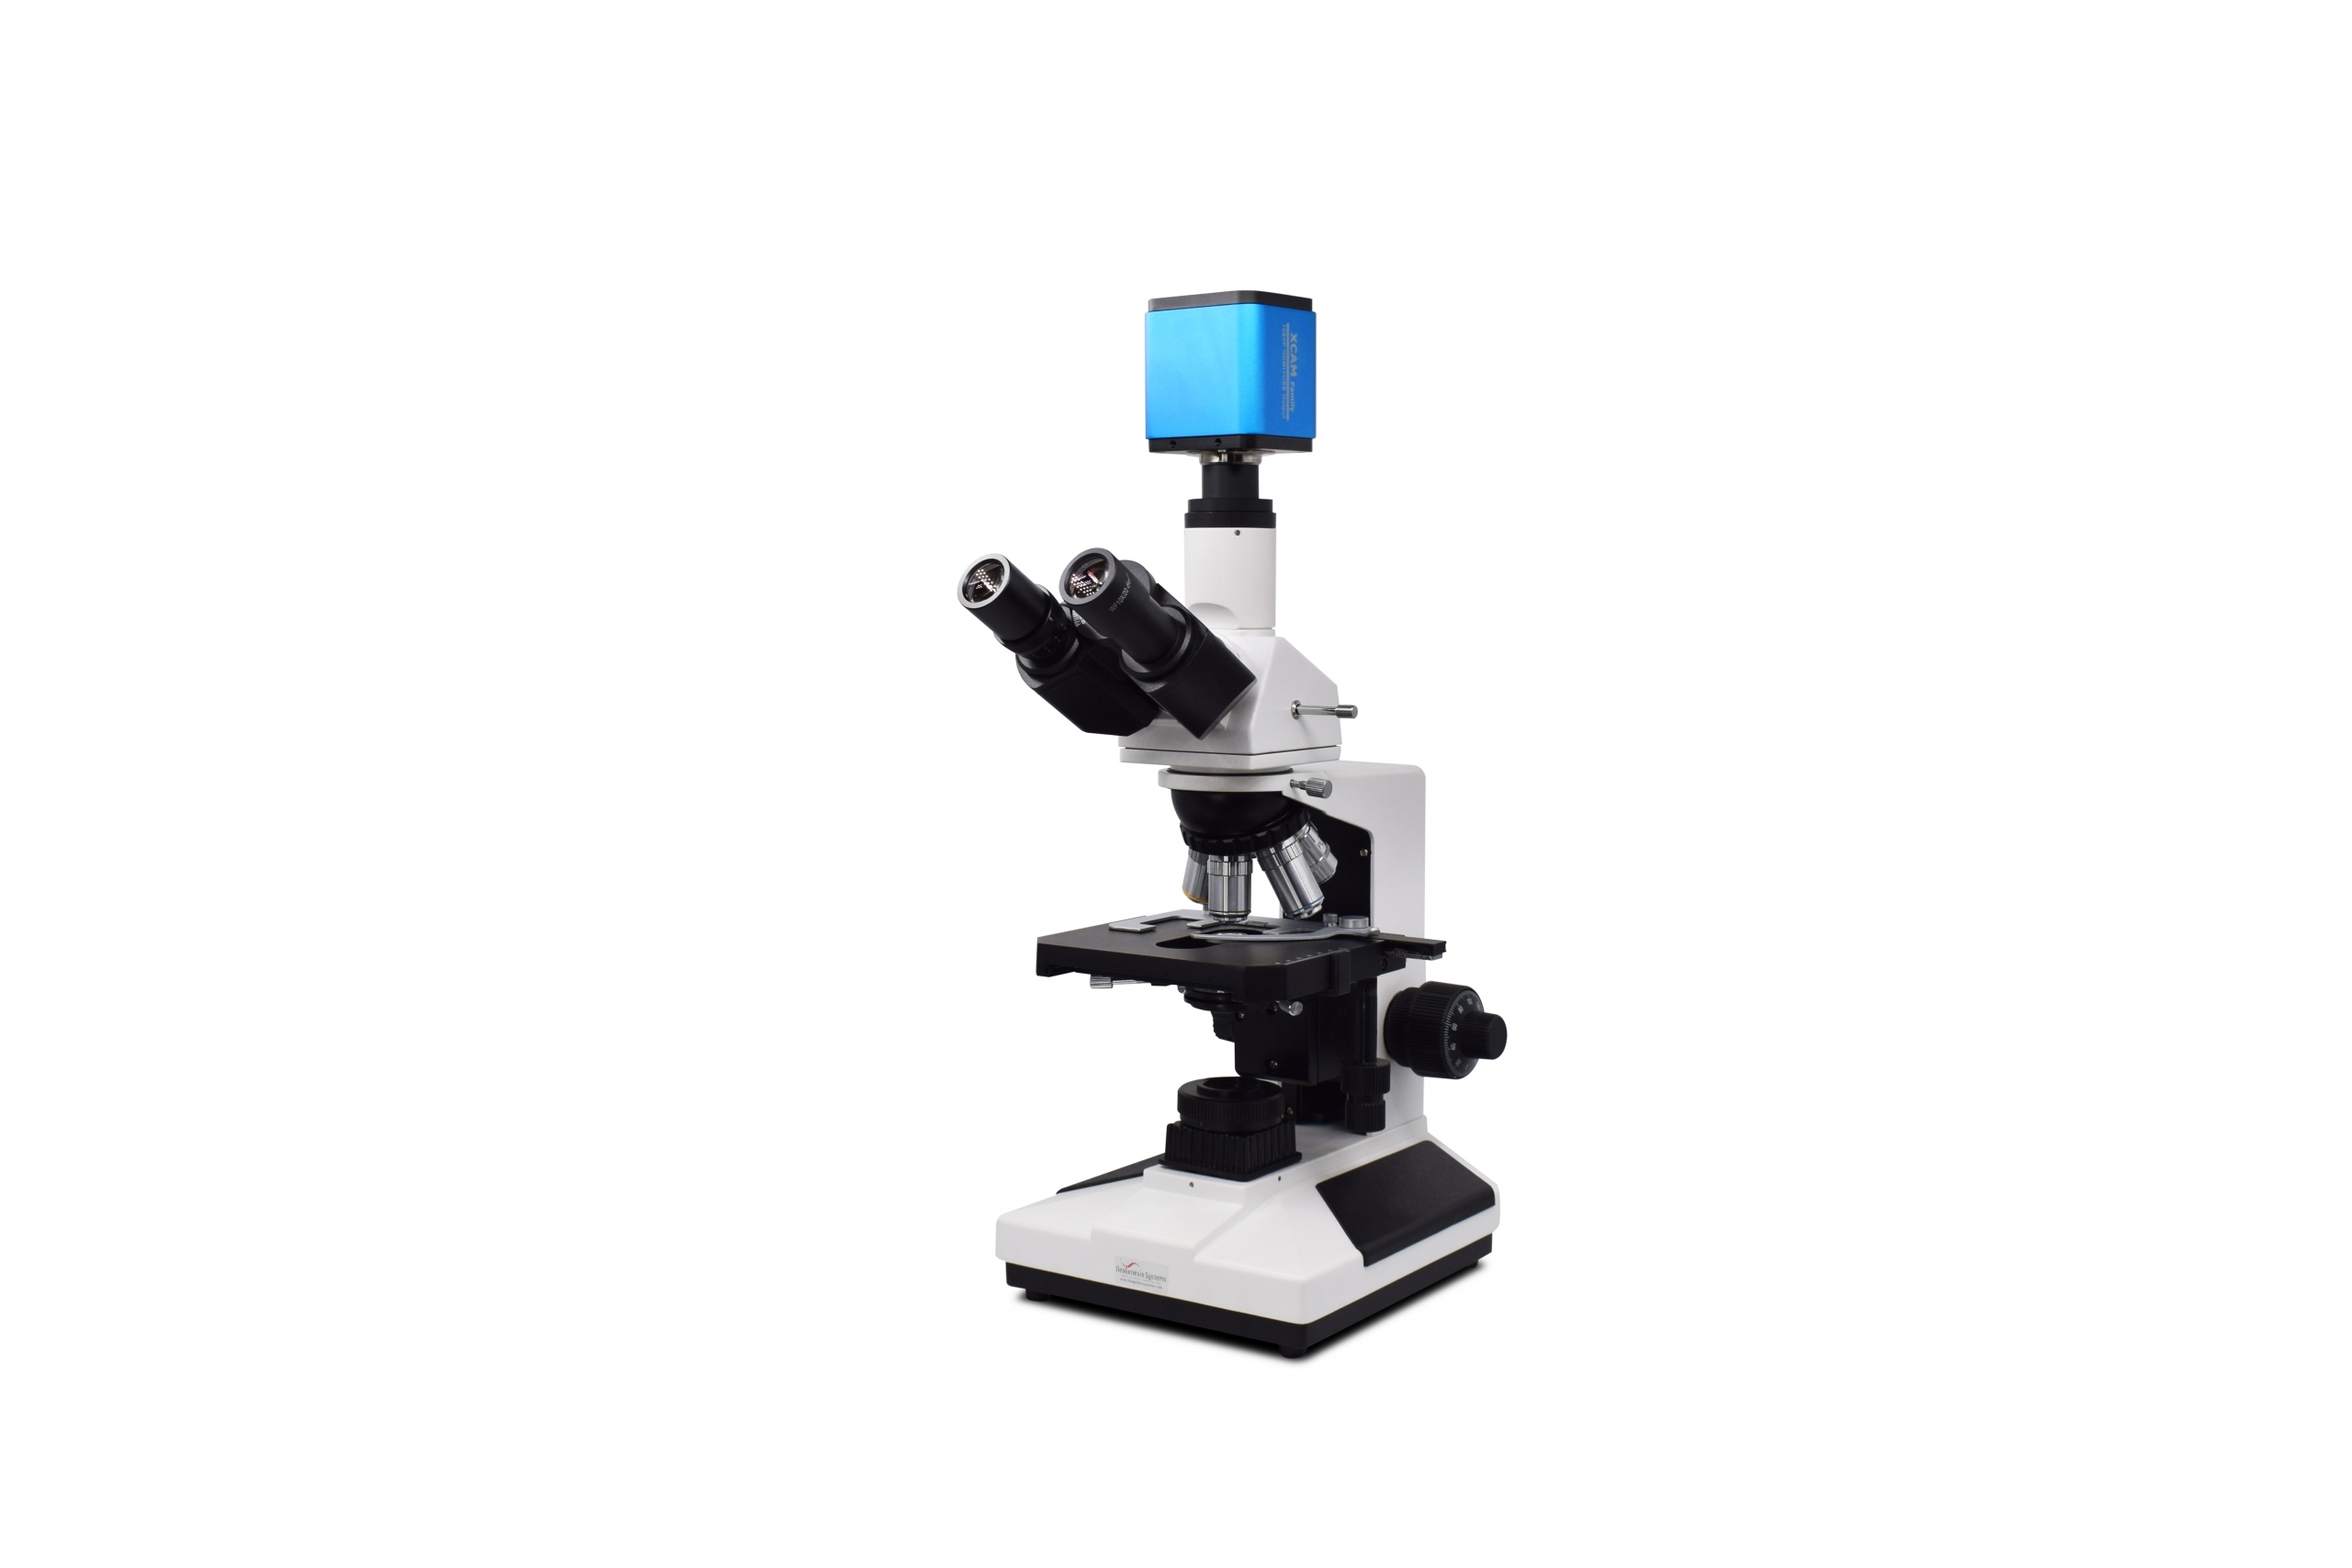 HDMI-LED microscope